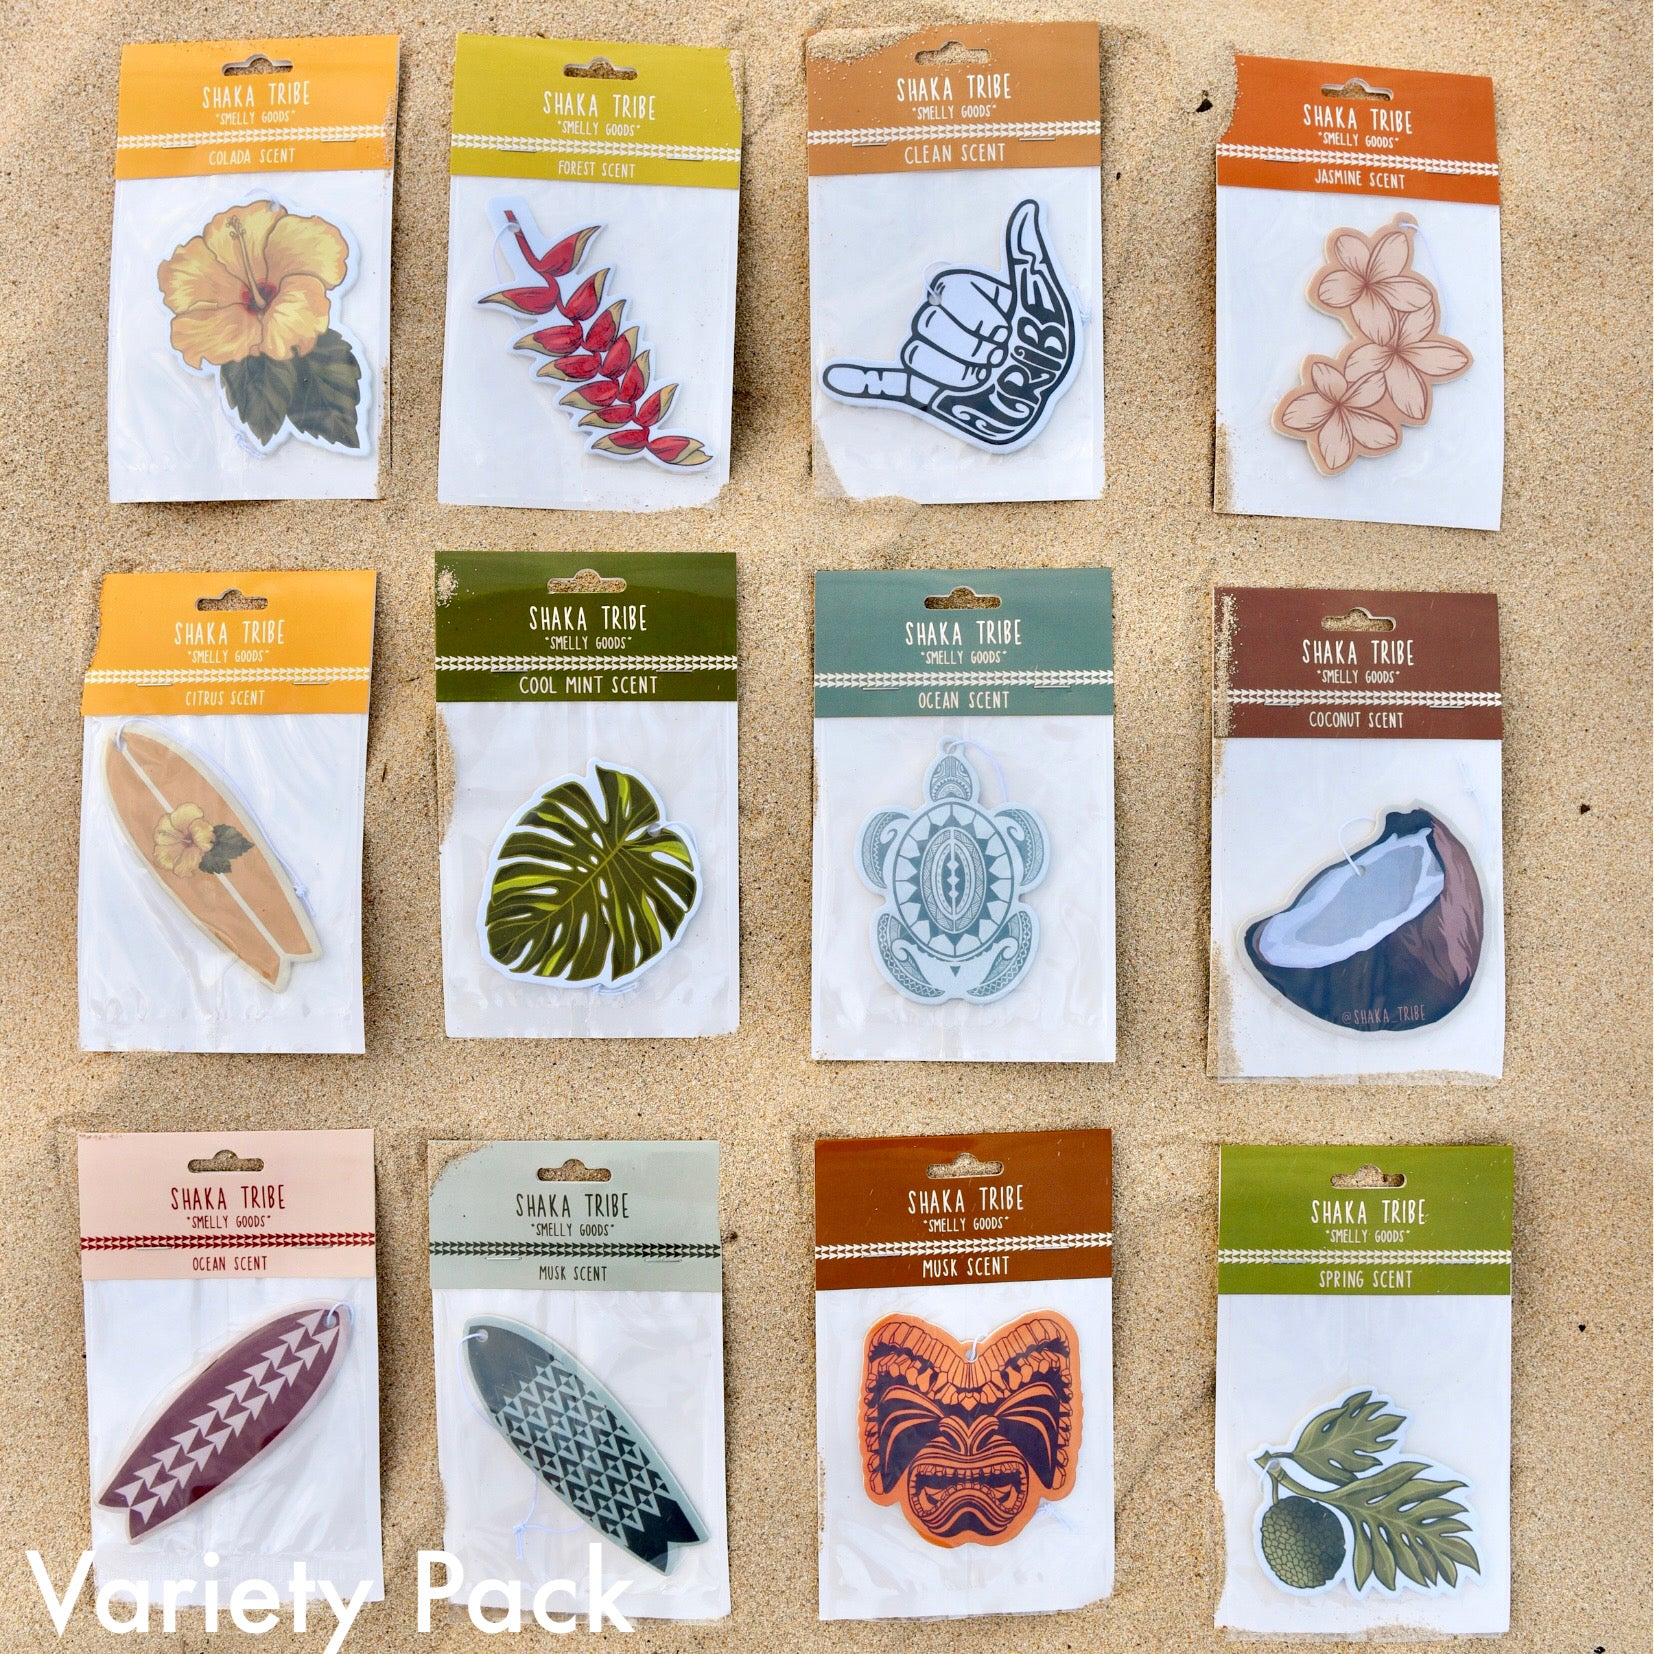 Variety Tribe - "Smelly Goods"